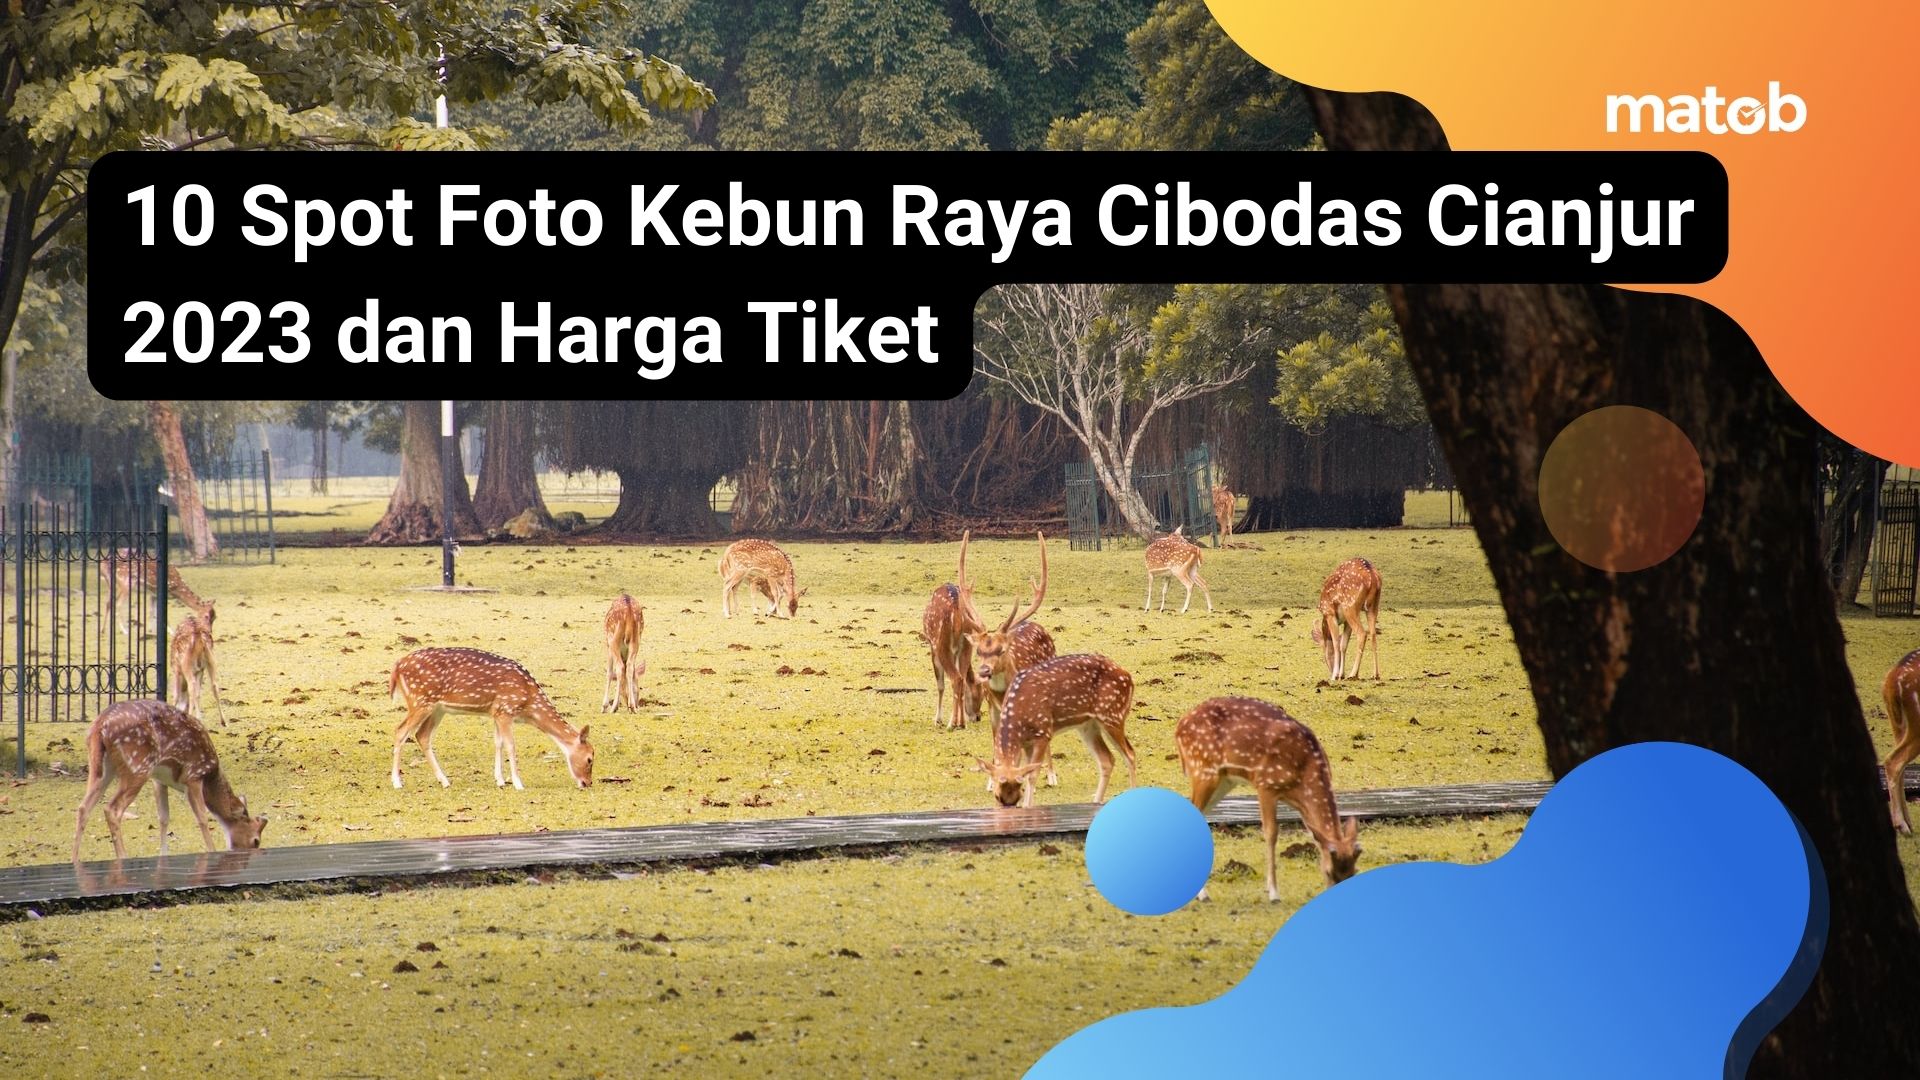 10 Spot Foto Kebun Raya Cibodas Cianjur 2023 dan Harga Tiket